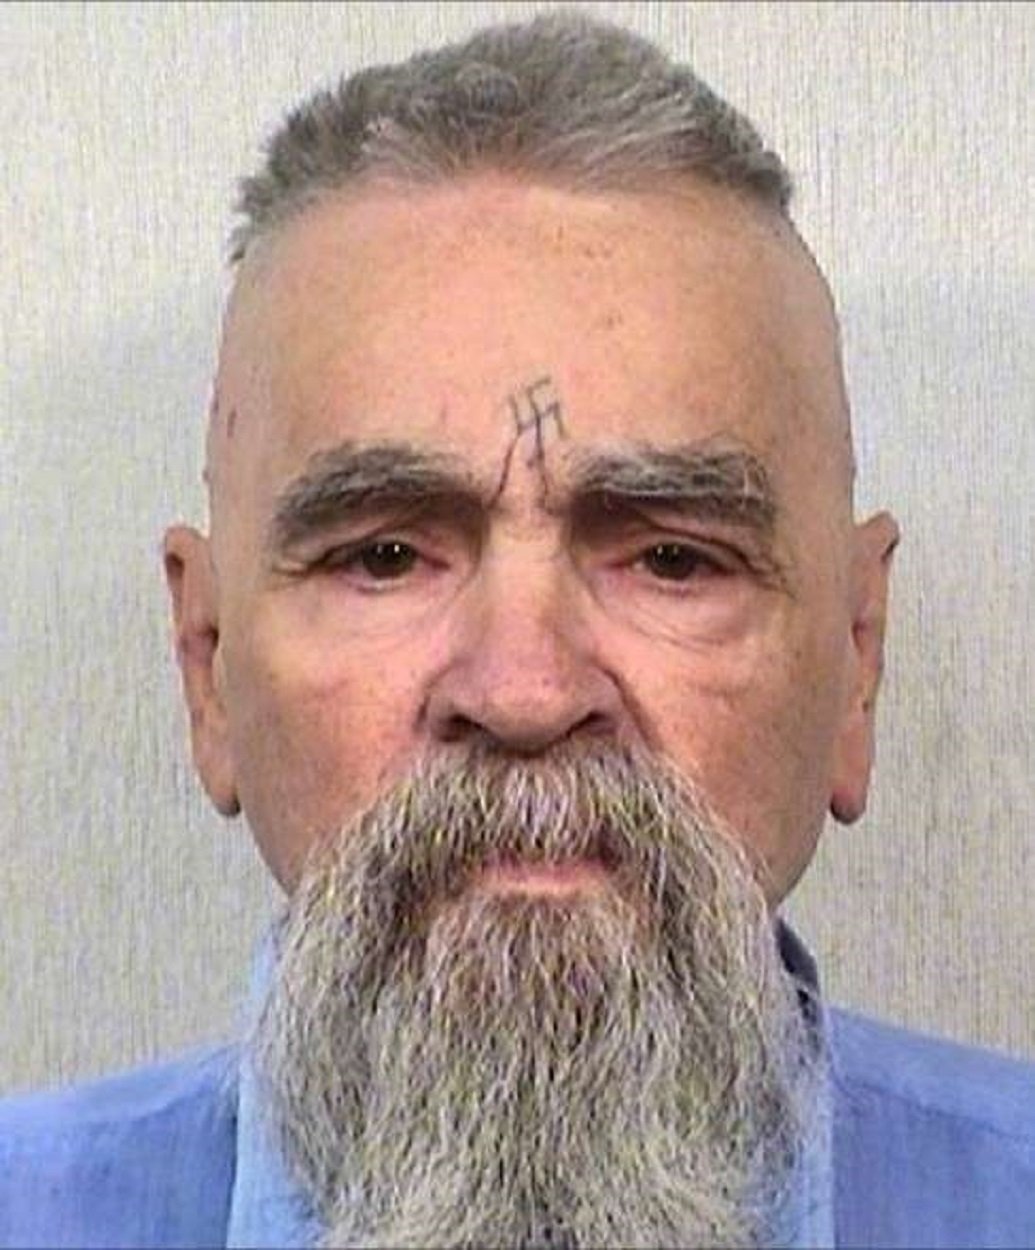 Mor l'assassí en sèrie Charles Manson als 83 anys